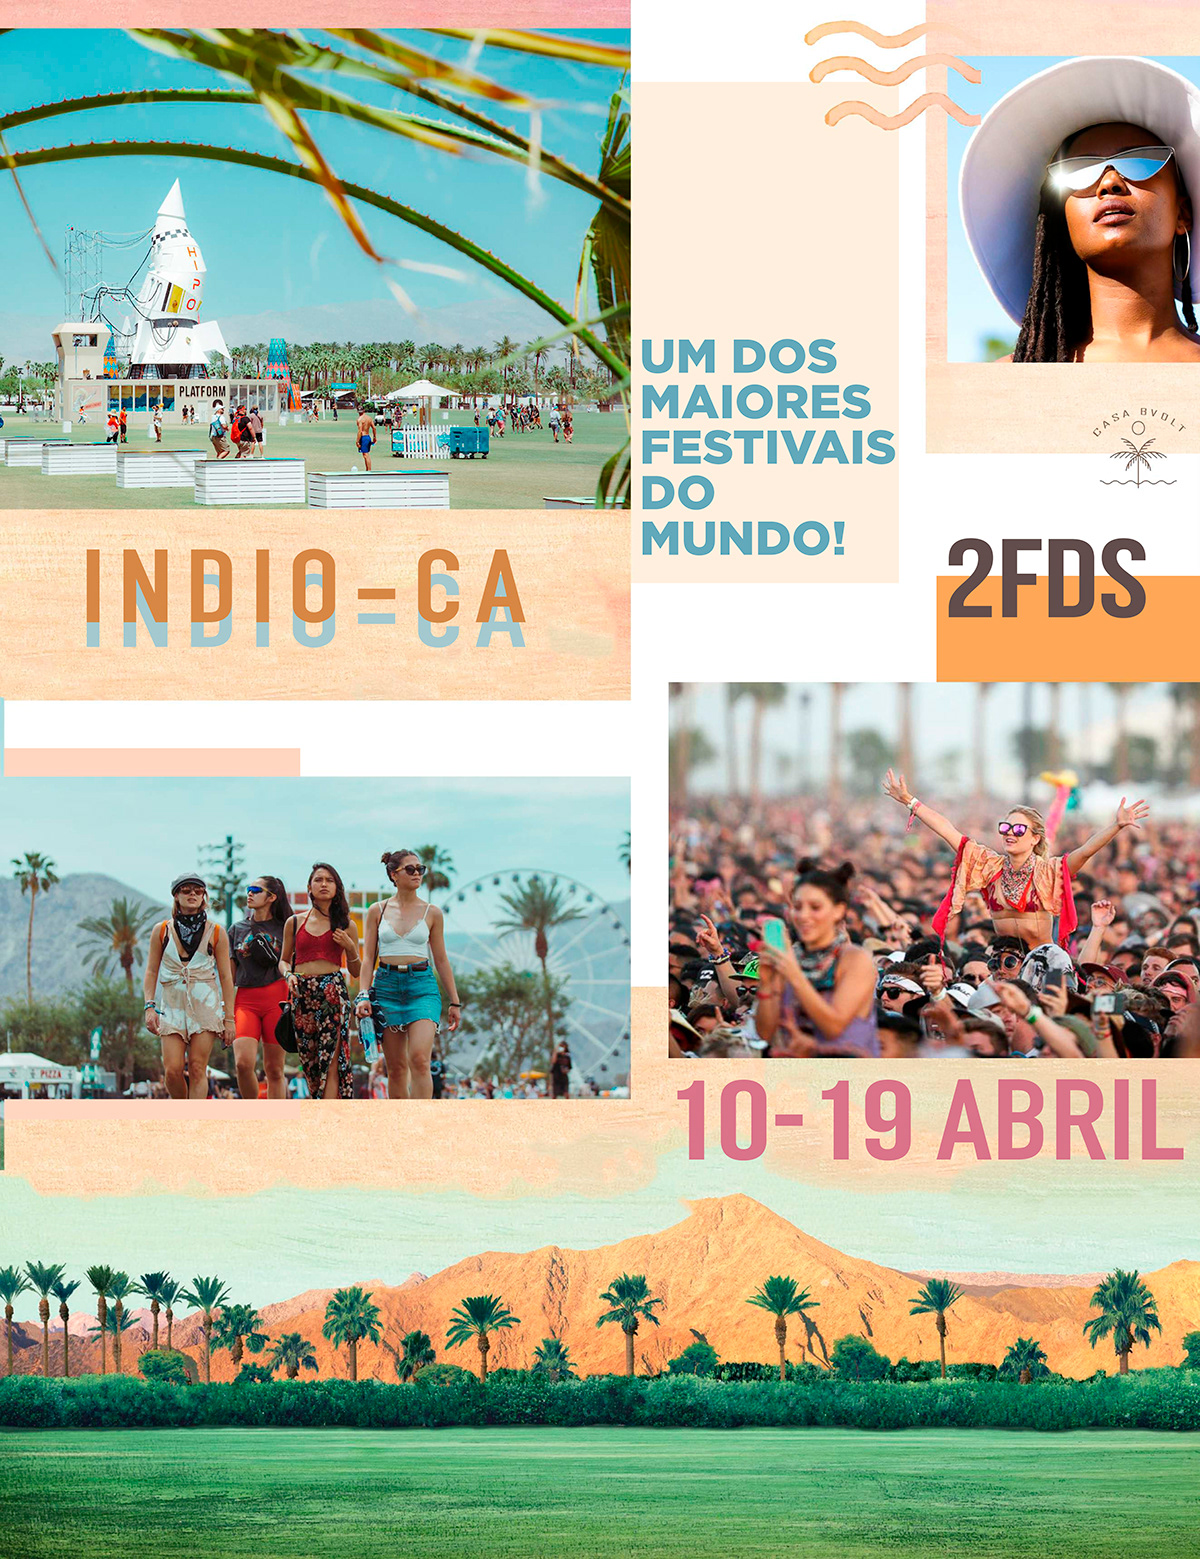 bloggers coachella Digital Influencer festival influencers projeto de viagem Travel Project trip project